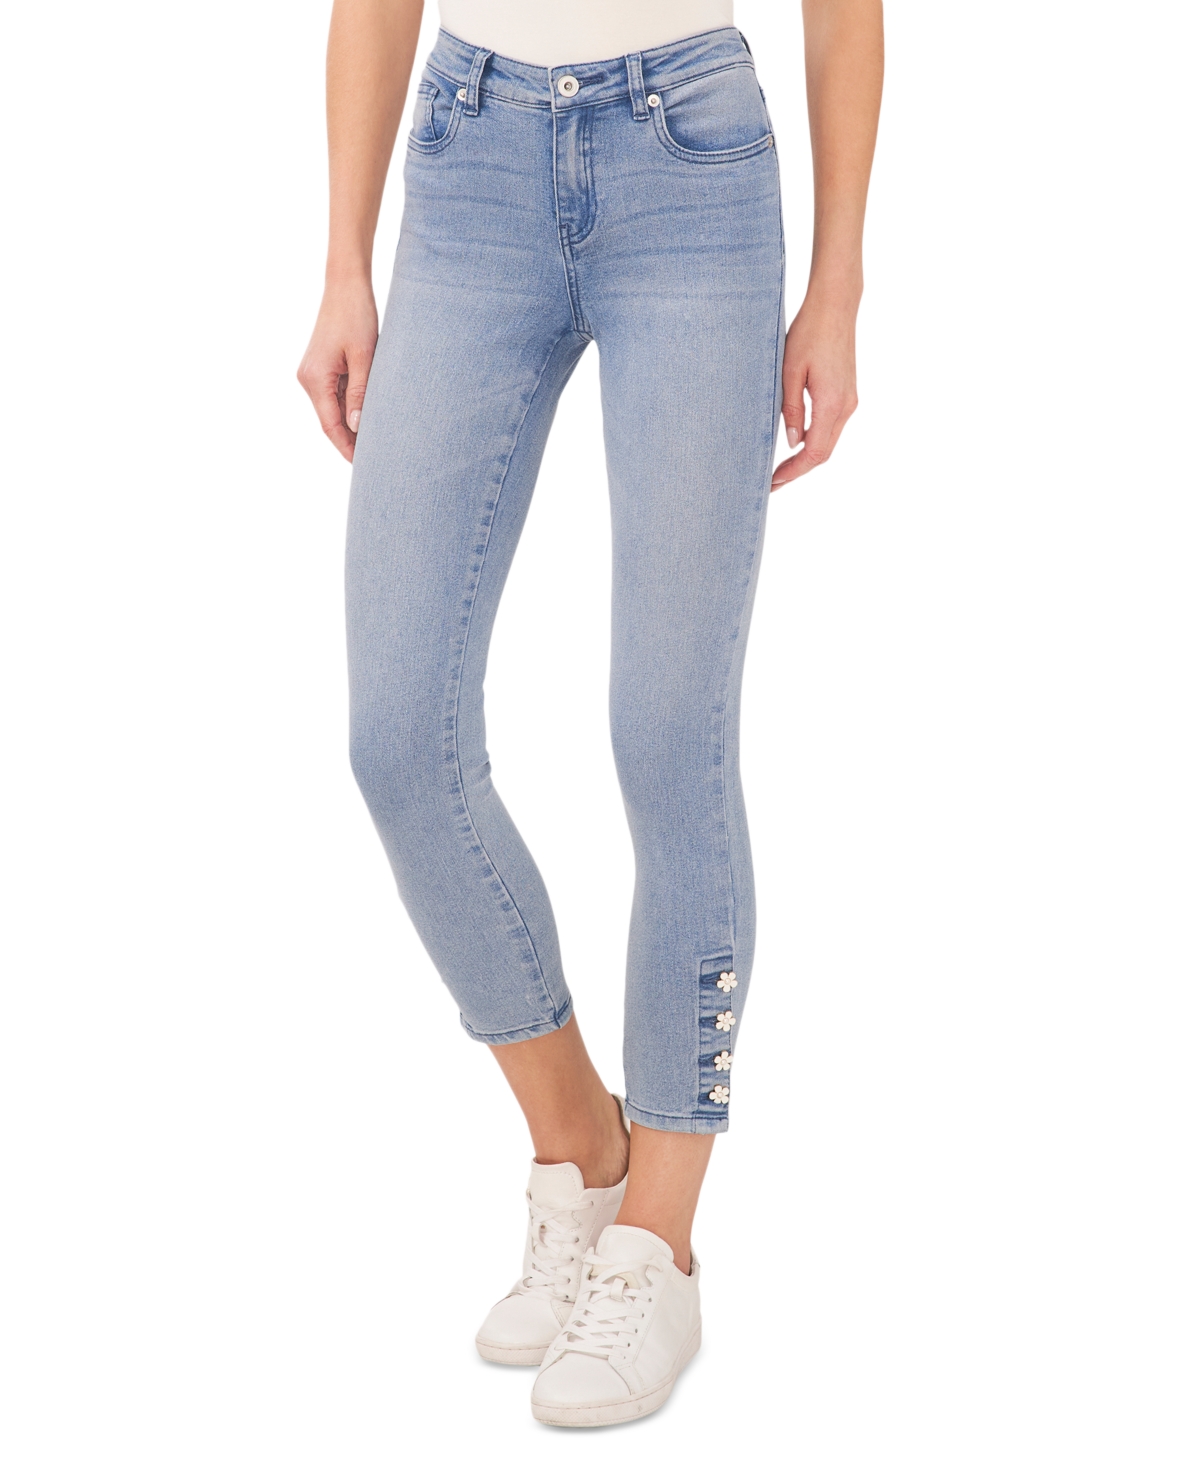  CeCe Women's Embellished Mid-Rise Skinny Jeans